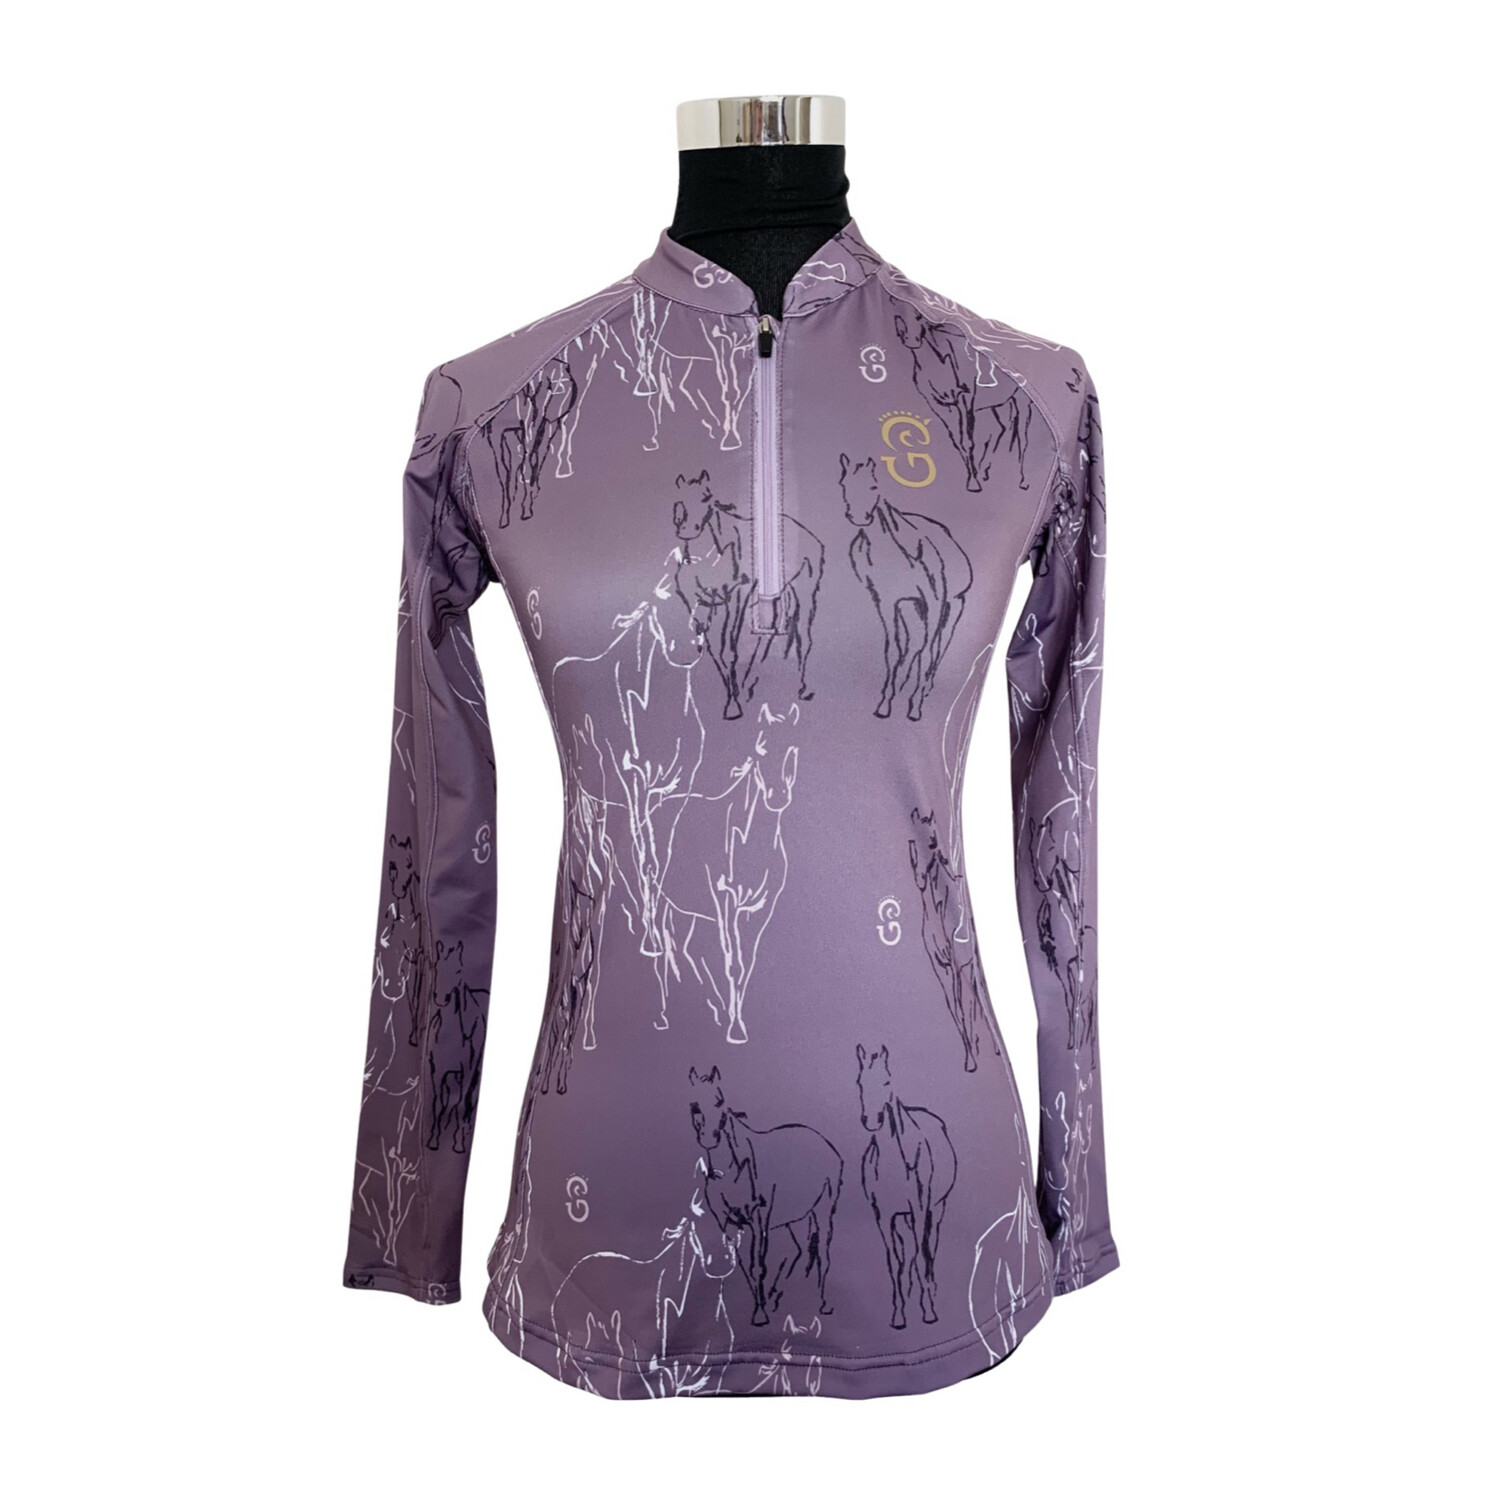 Equi-Site “RHEA” UV Riding Shirt 